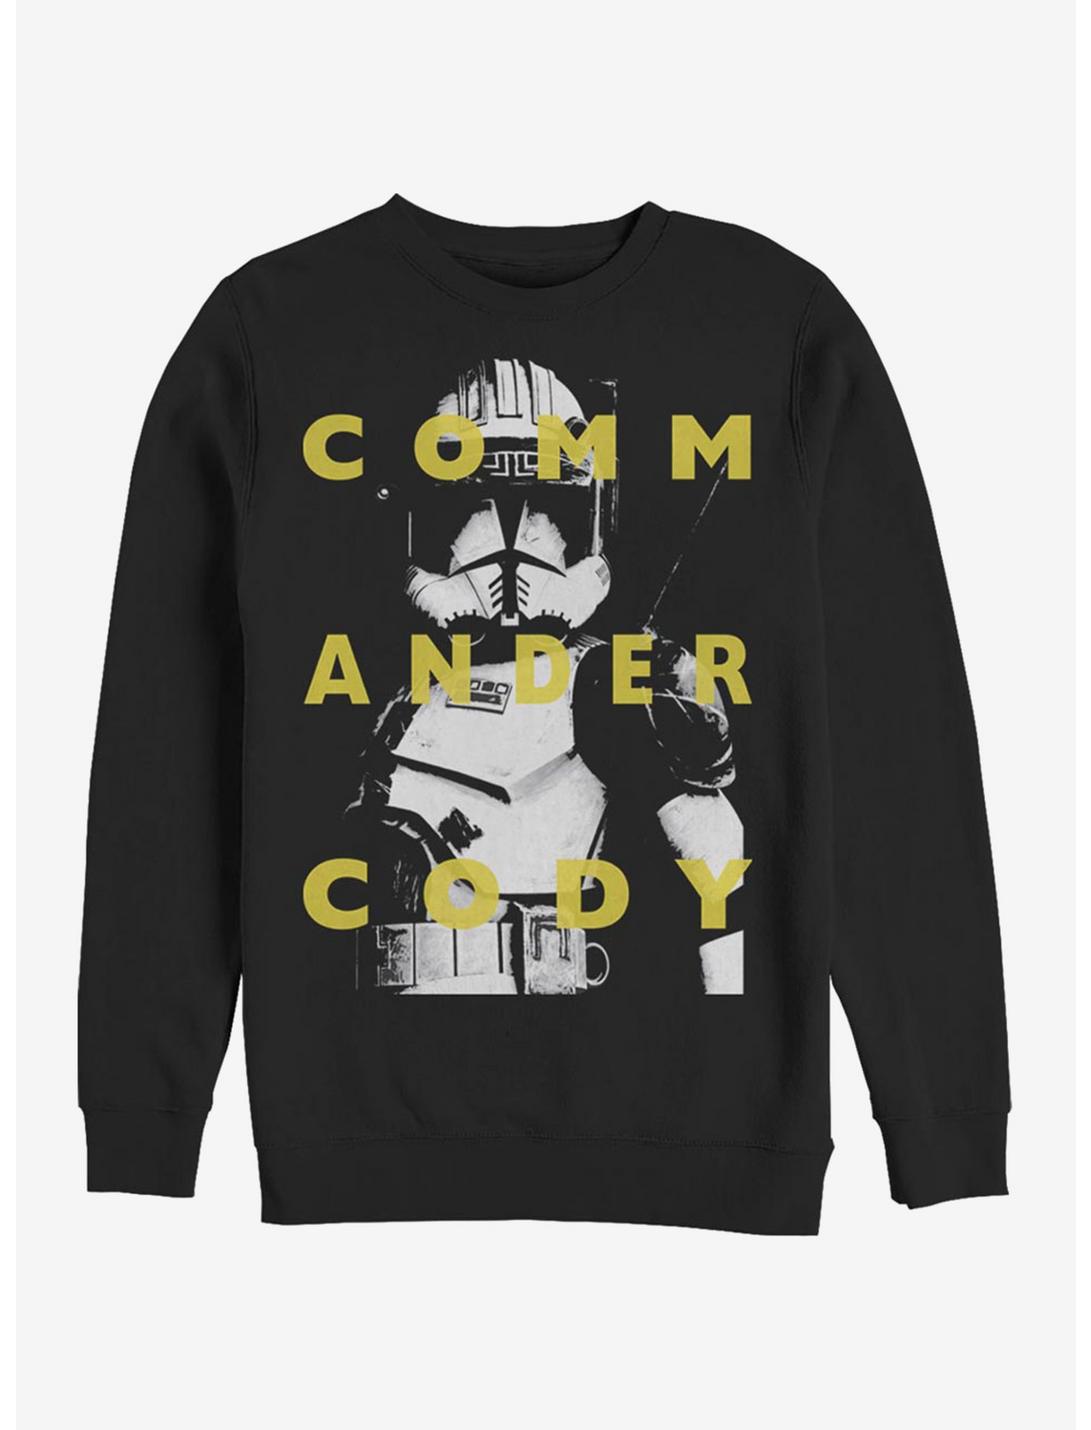 Star Wars: The Clone Wars Commander Cody Text Sweatshirt, BLACK, hi-res